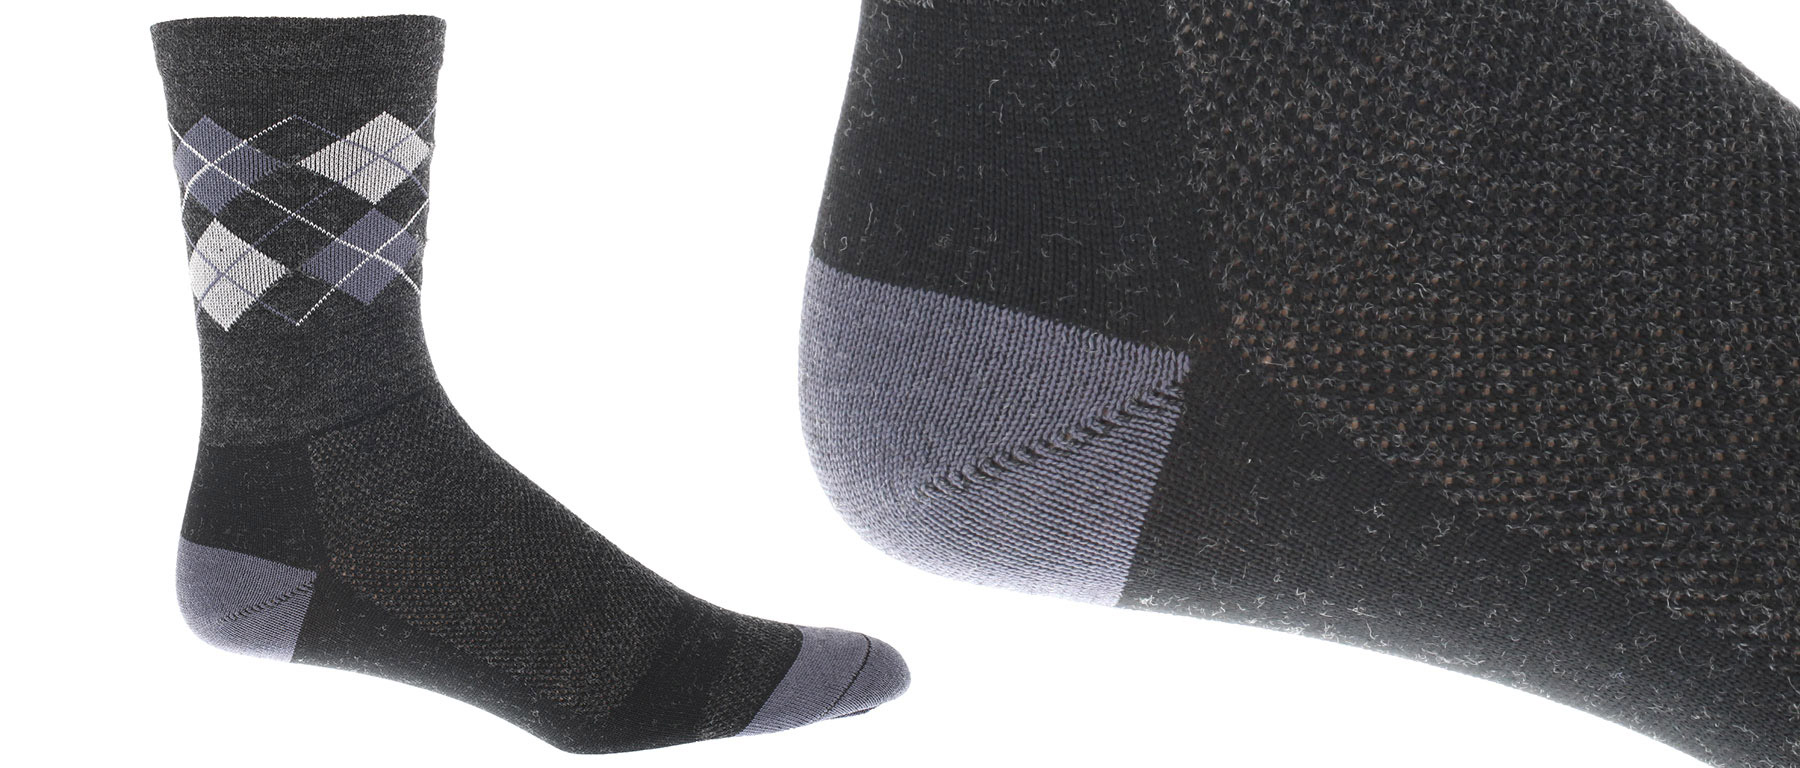 DeFeet WoolEator 5in Argyle Sock